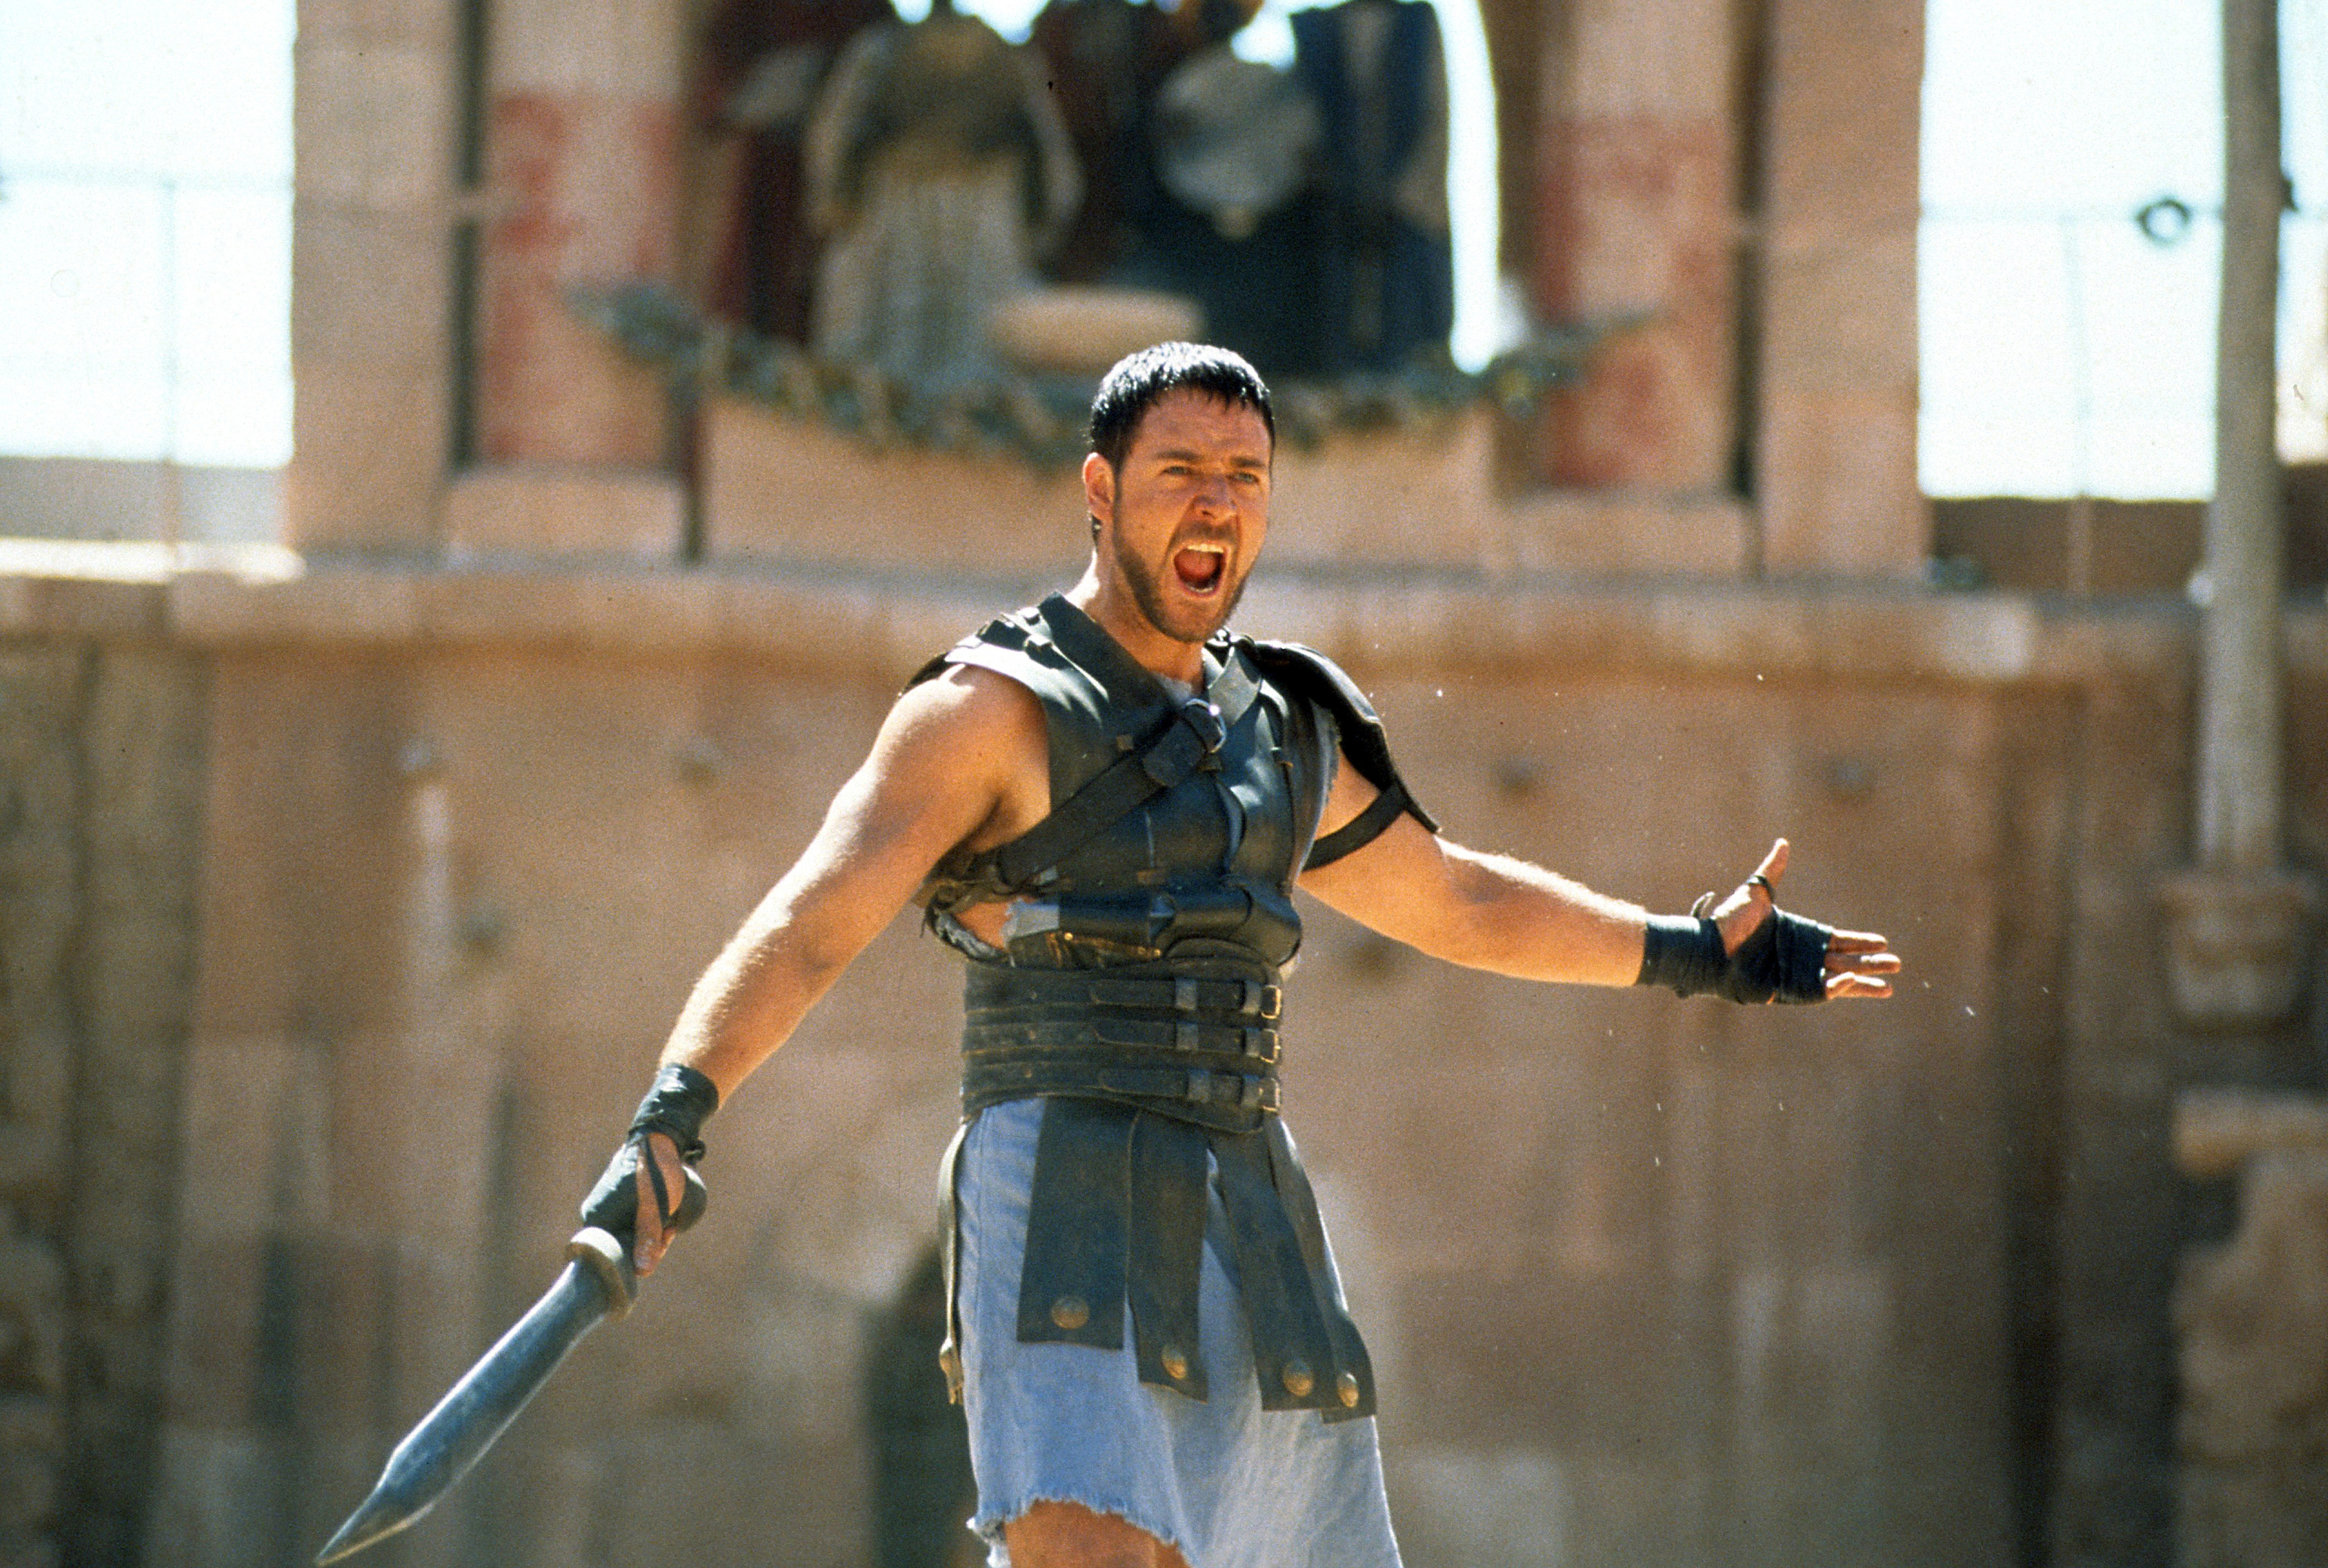 Russel Crowe yielding a sword in a scene from Gladiator